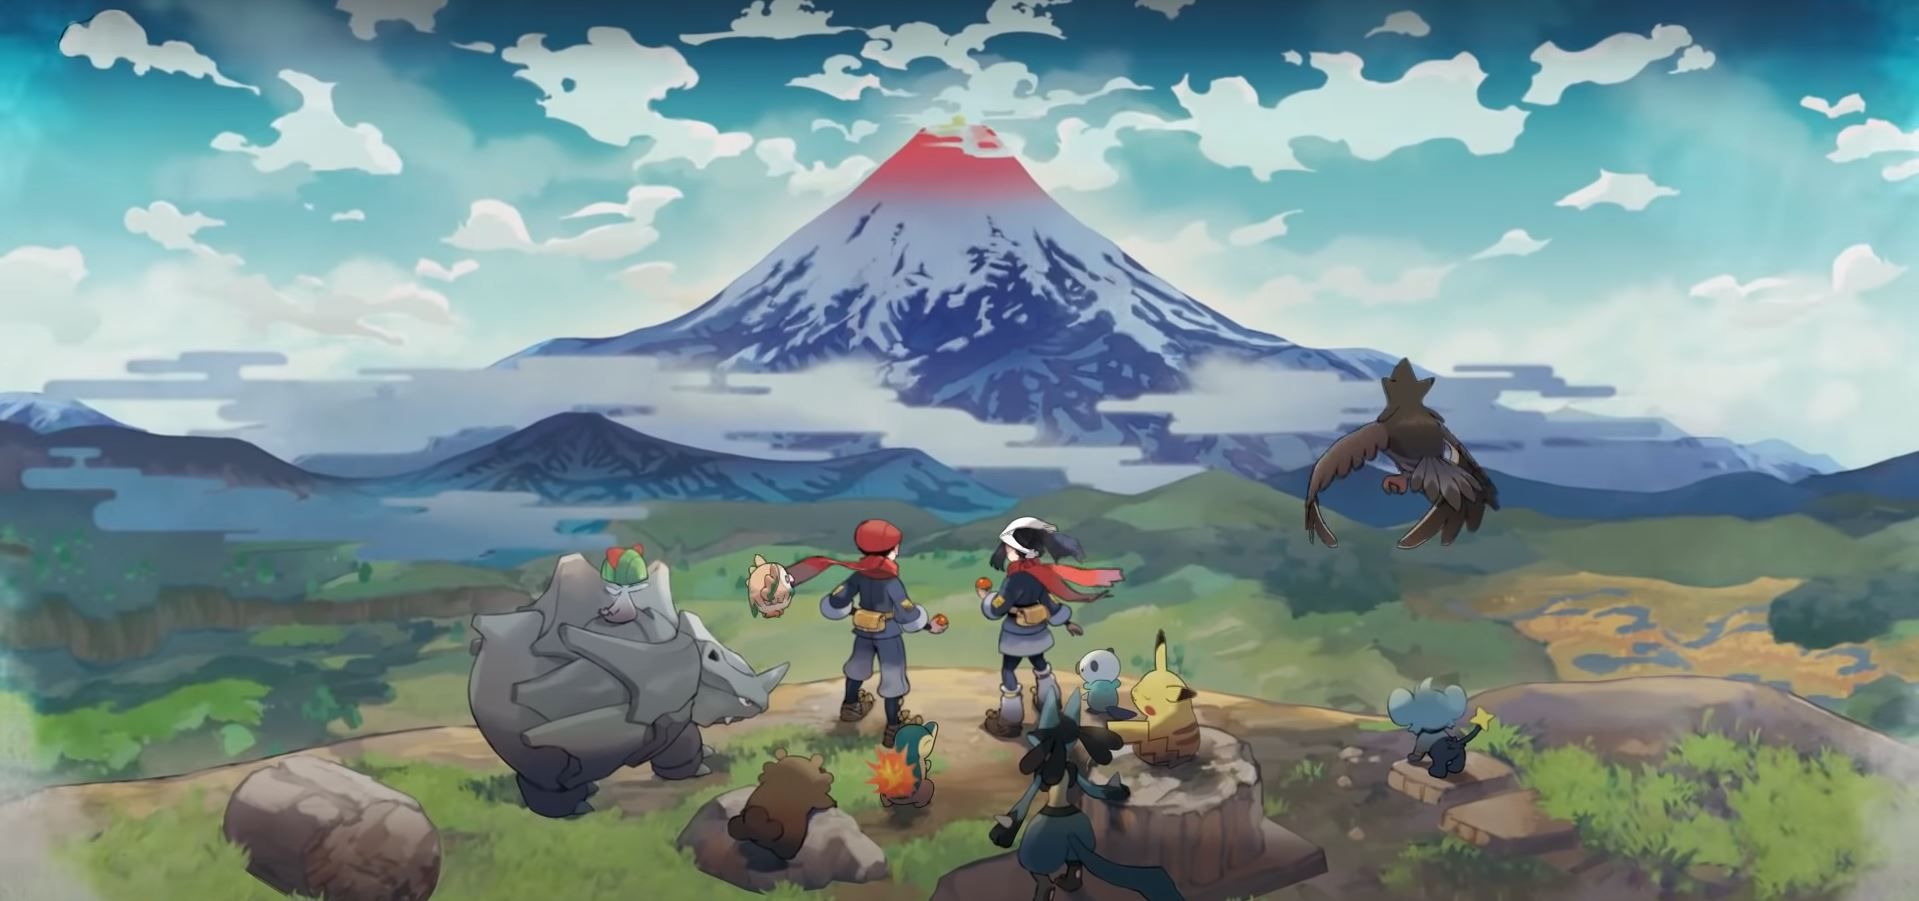 Mouldbreaking Pokemon Legends Arceus gets anime series in summer 2022  Digital News  AsiaOne